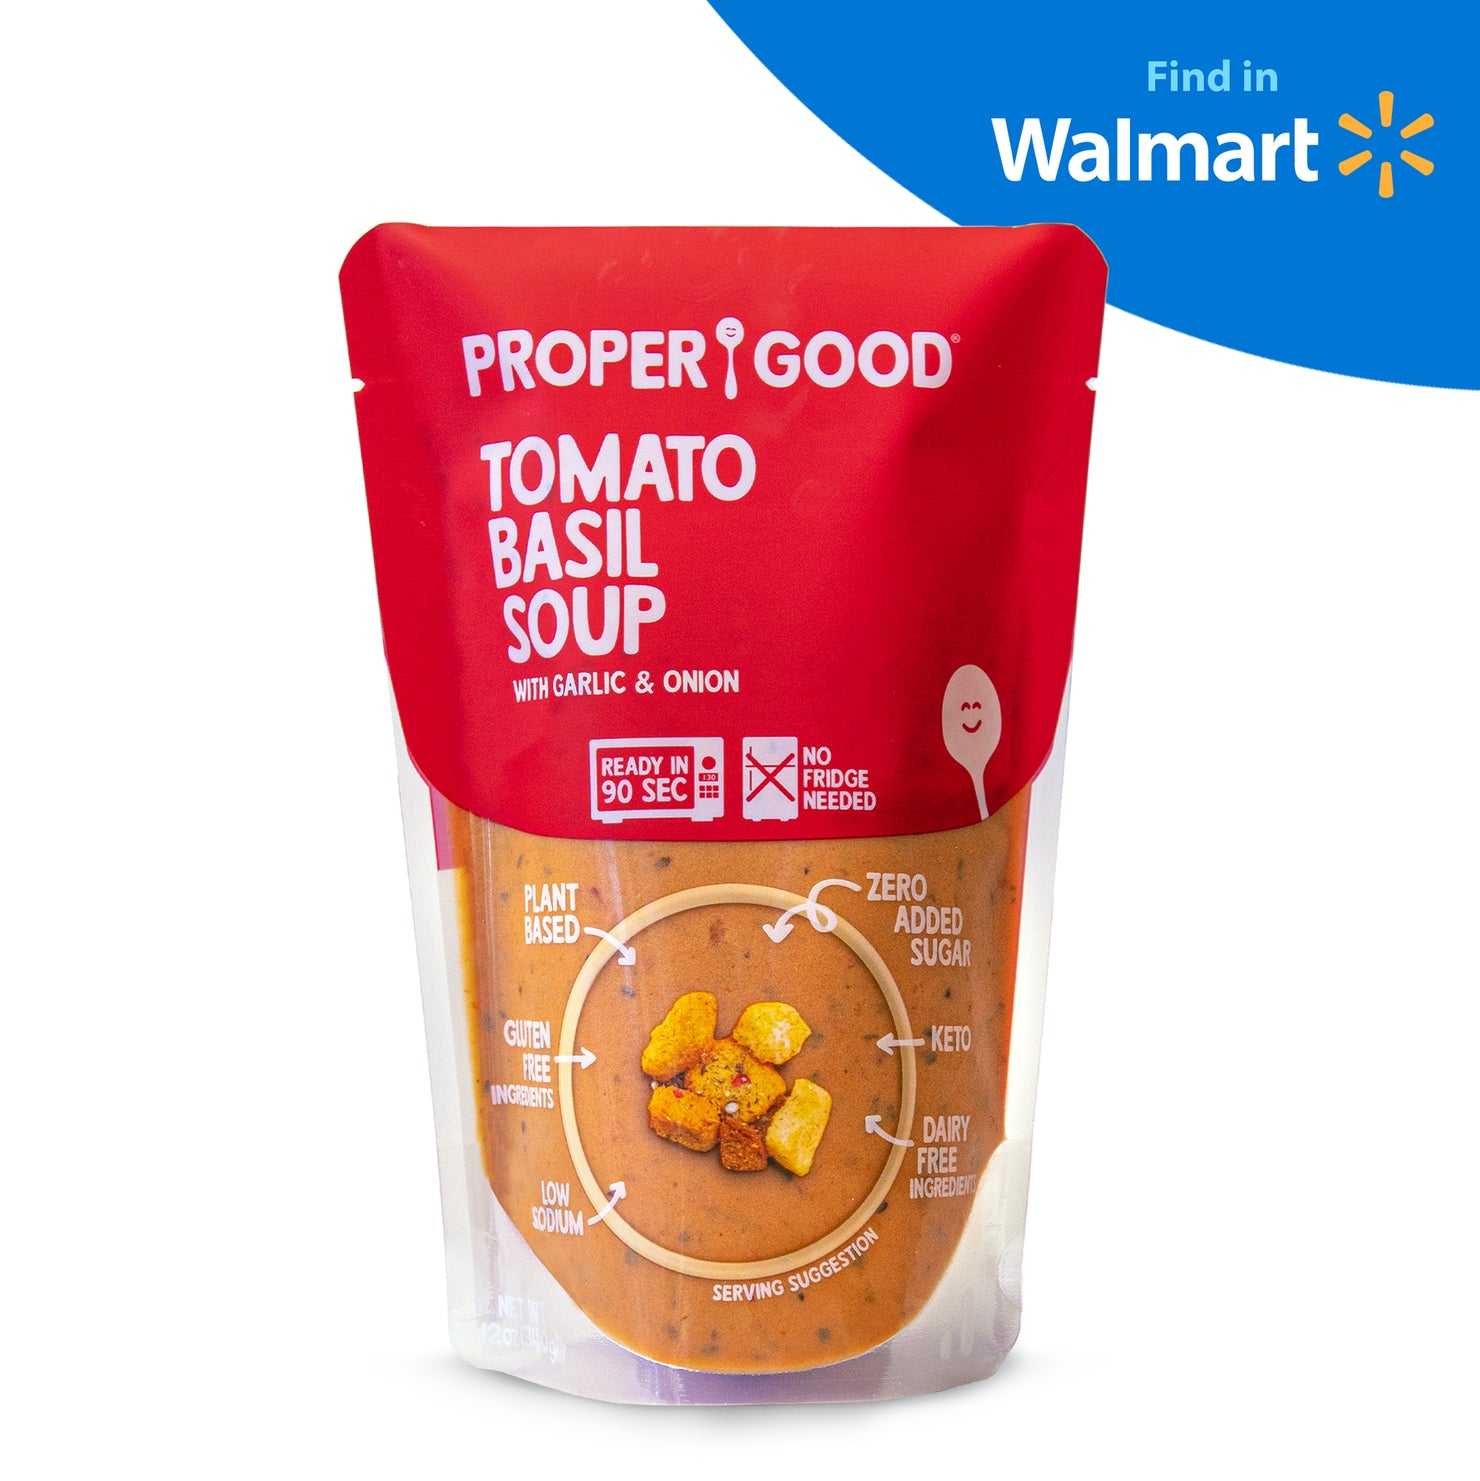 Tomato & Basil Soup - Find in Walmart - Eat Proper Good